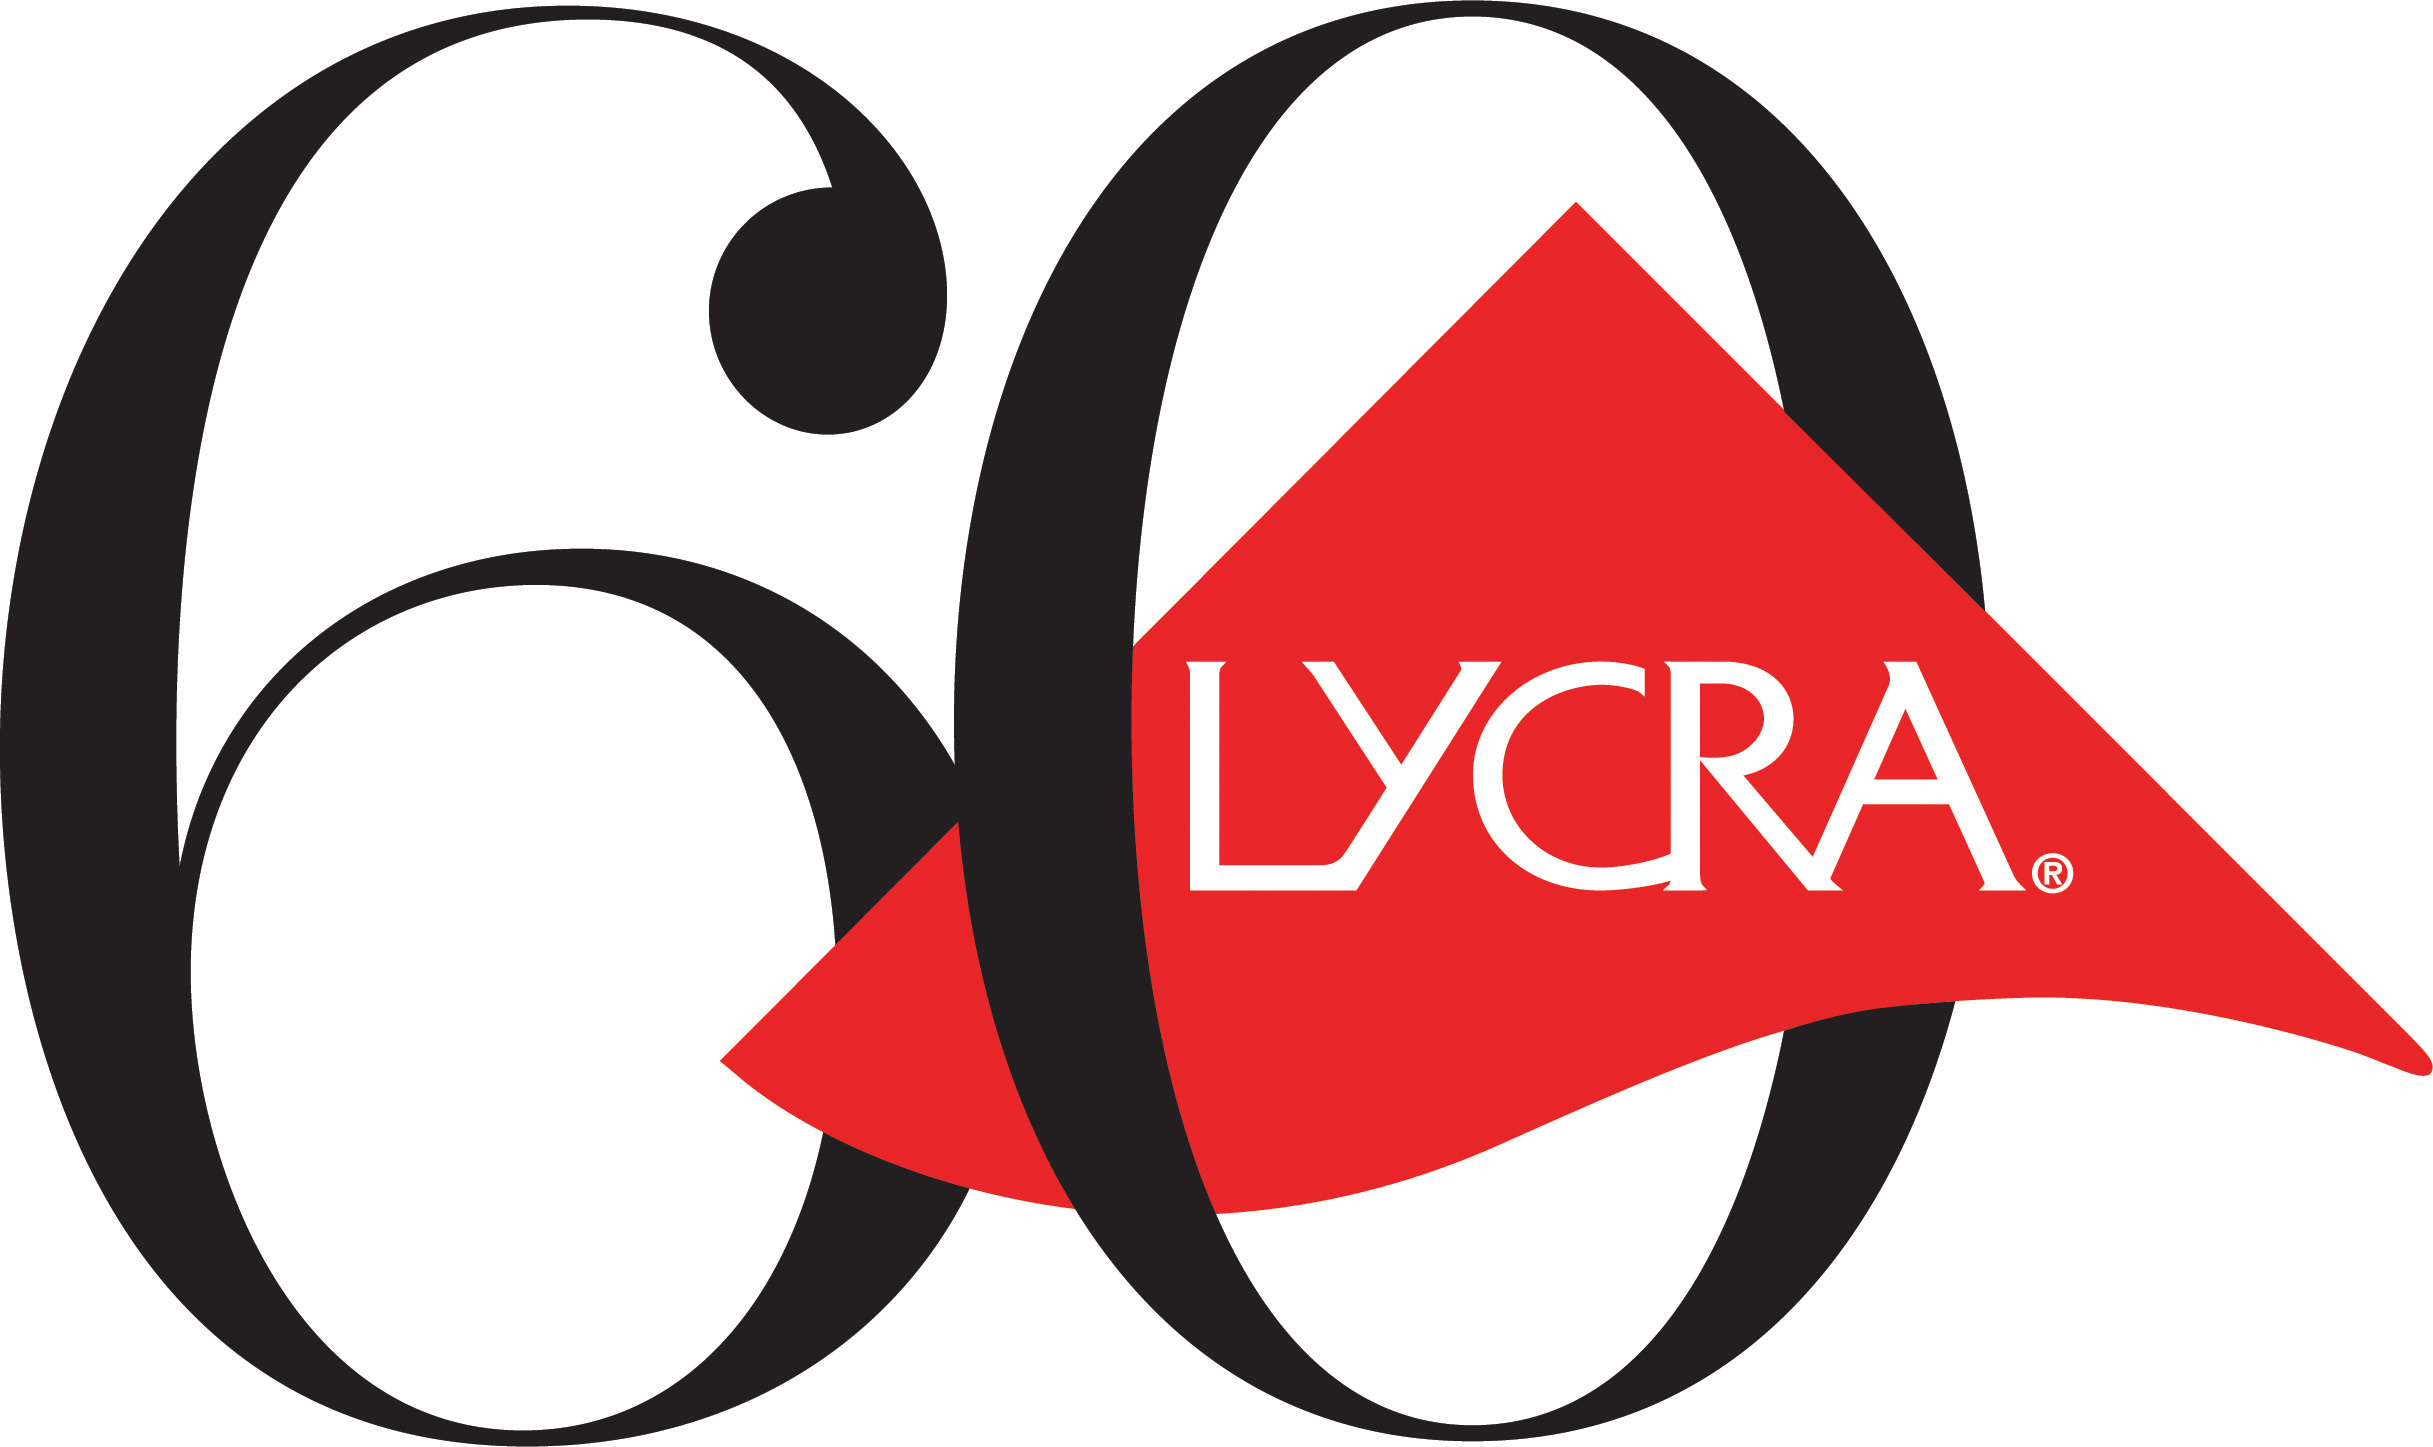 LYCRA® Brand Celebrates 60 Years of Groundbreaking Innovations